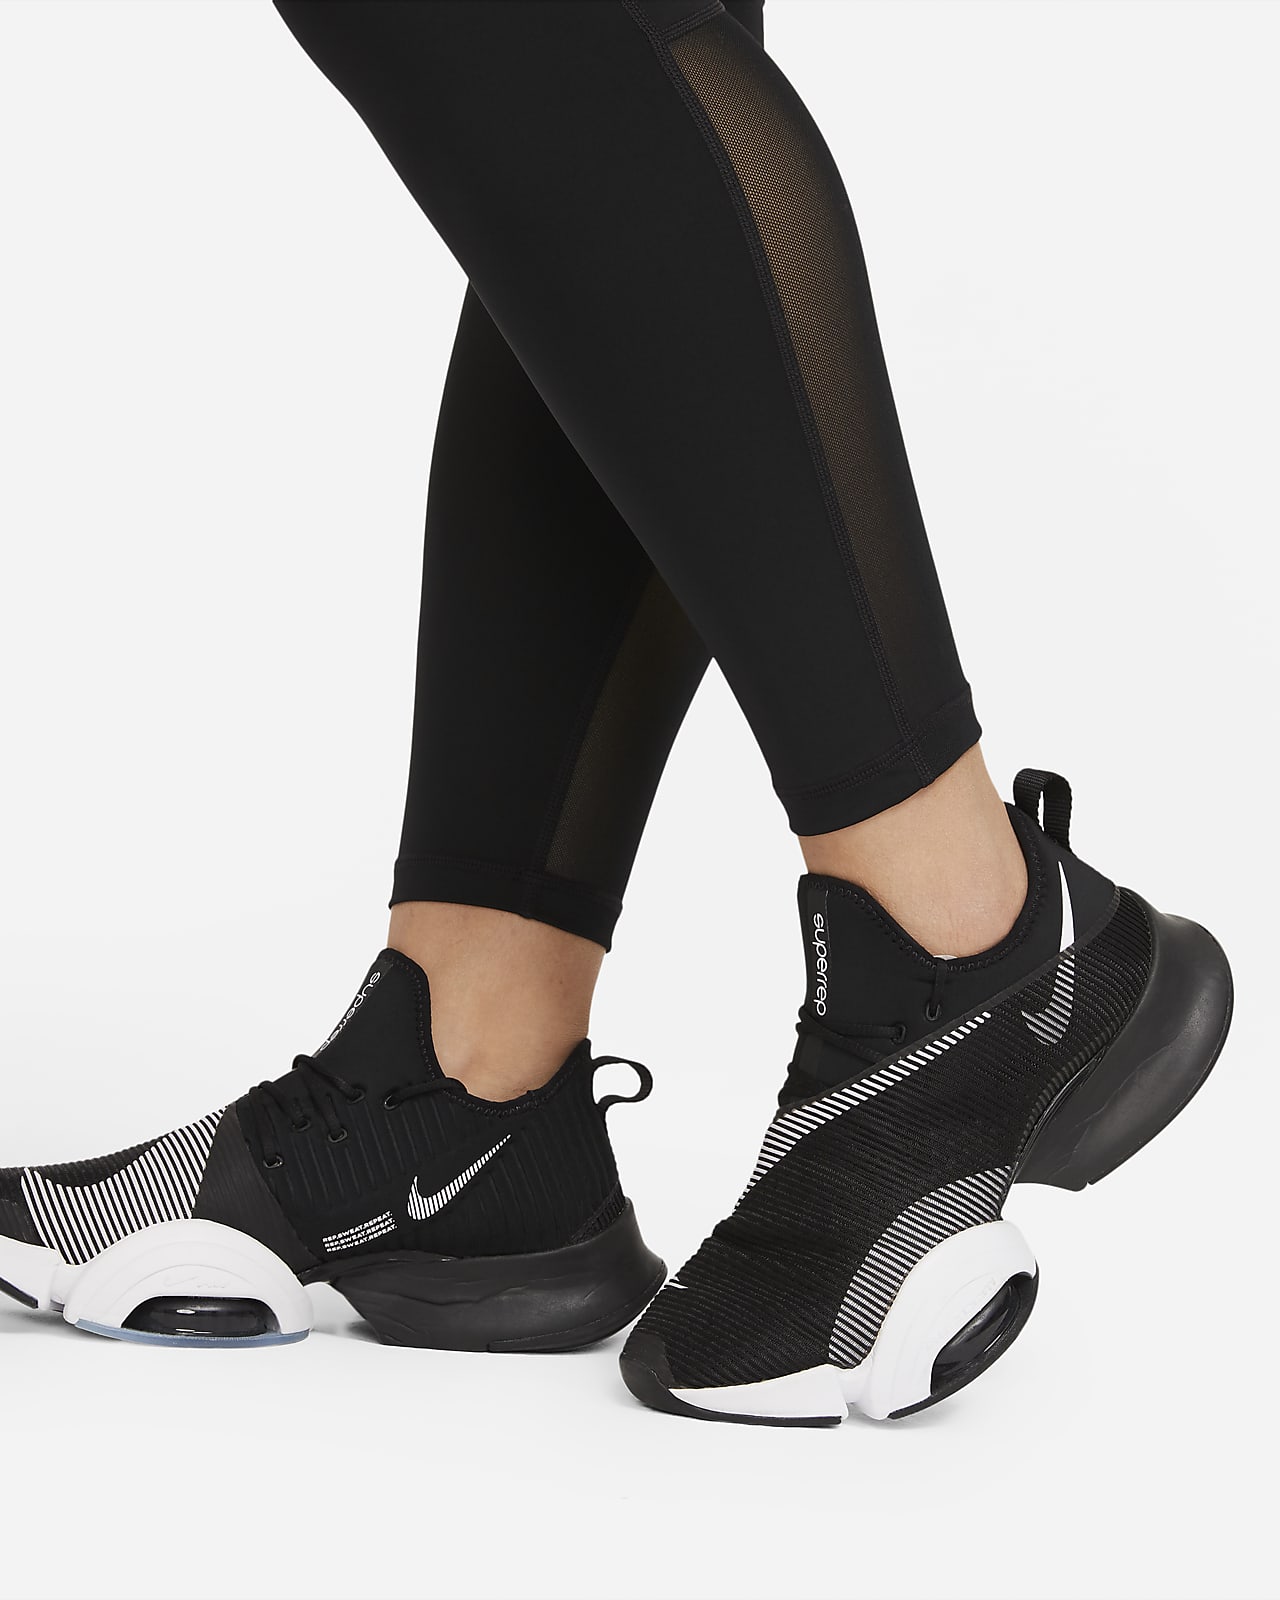 Nike Training Pro 365 leggings in black - ShopStyle Activewear